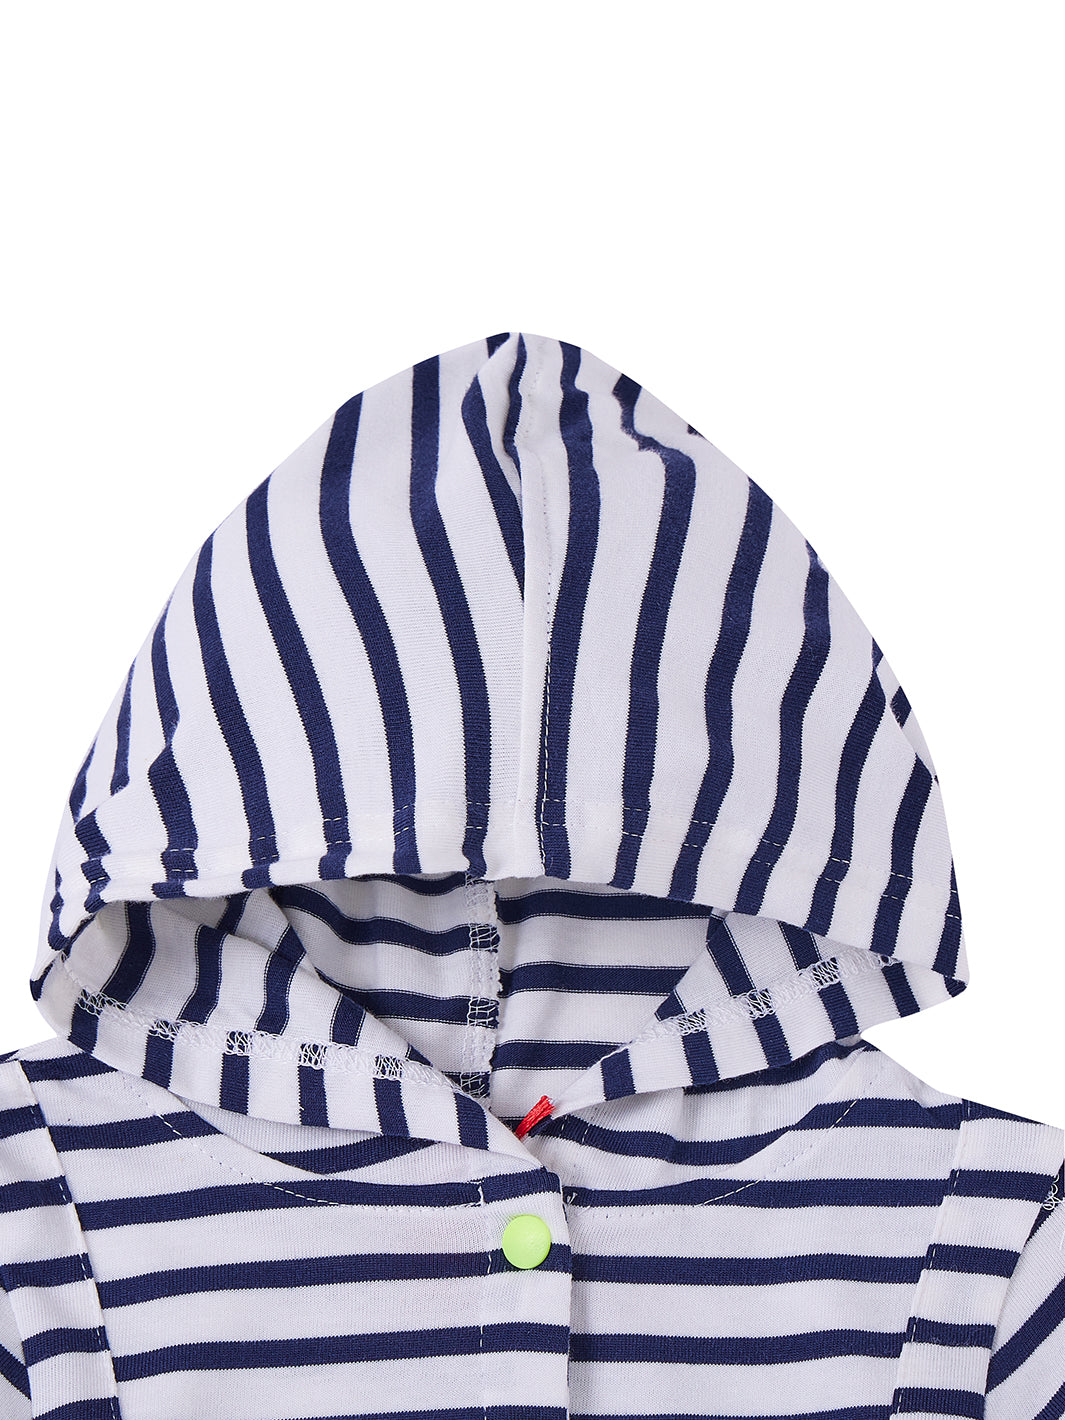 Striped Hooded Dress - White/Navy